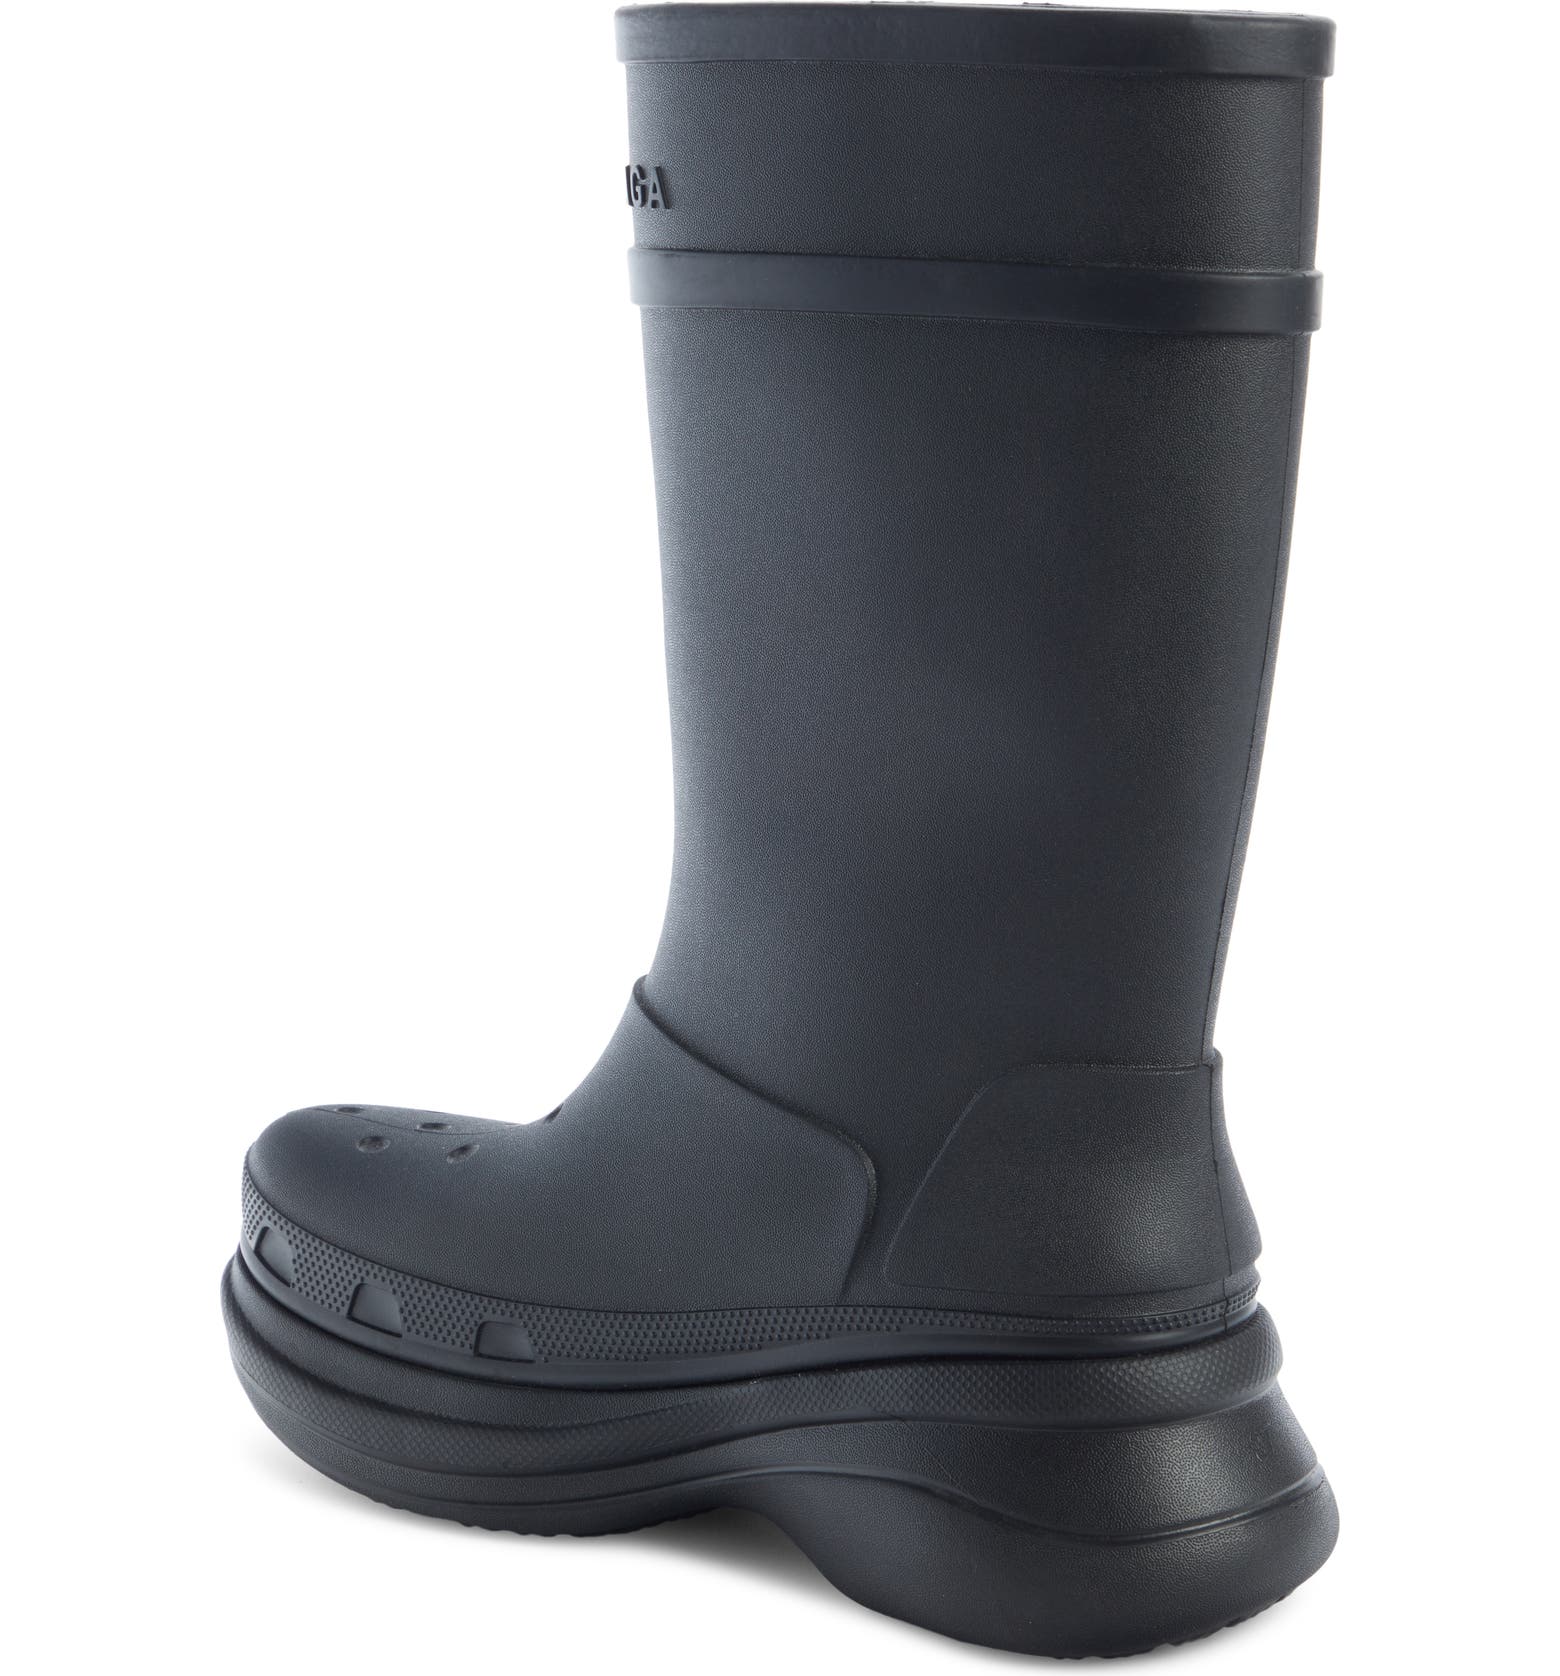 Balenciaga x CROCS Water Resistant Boot (Women) | Nordstrom